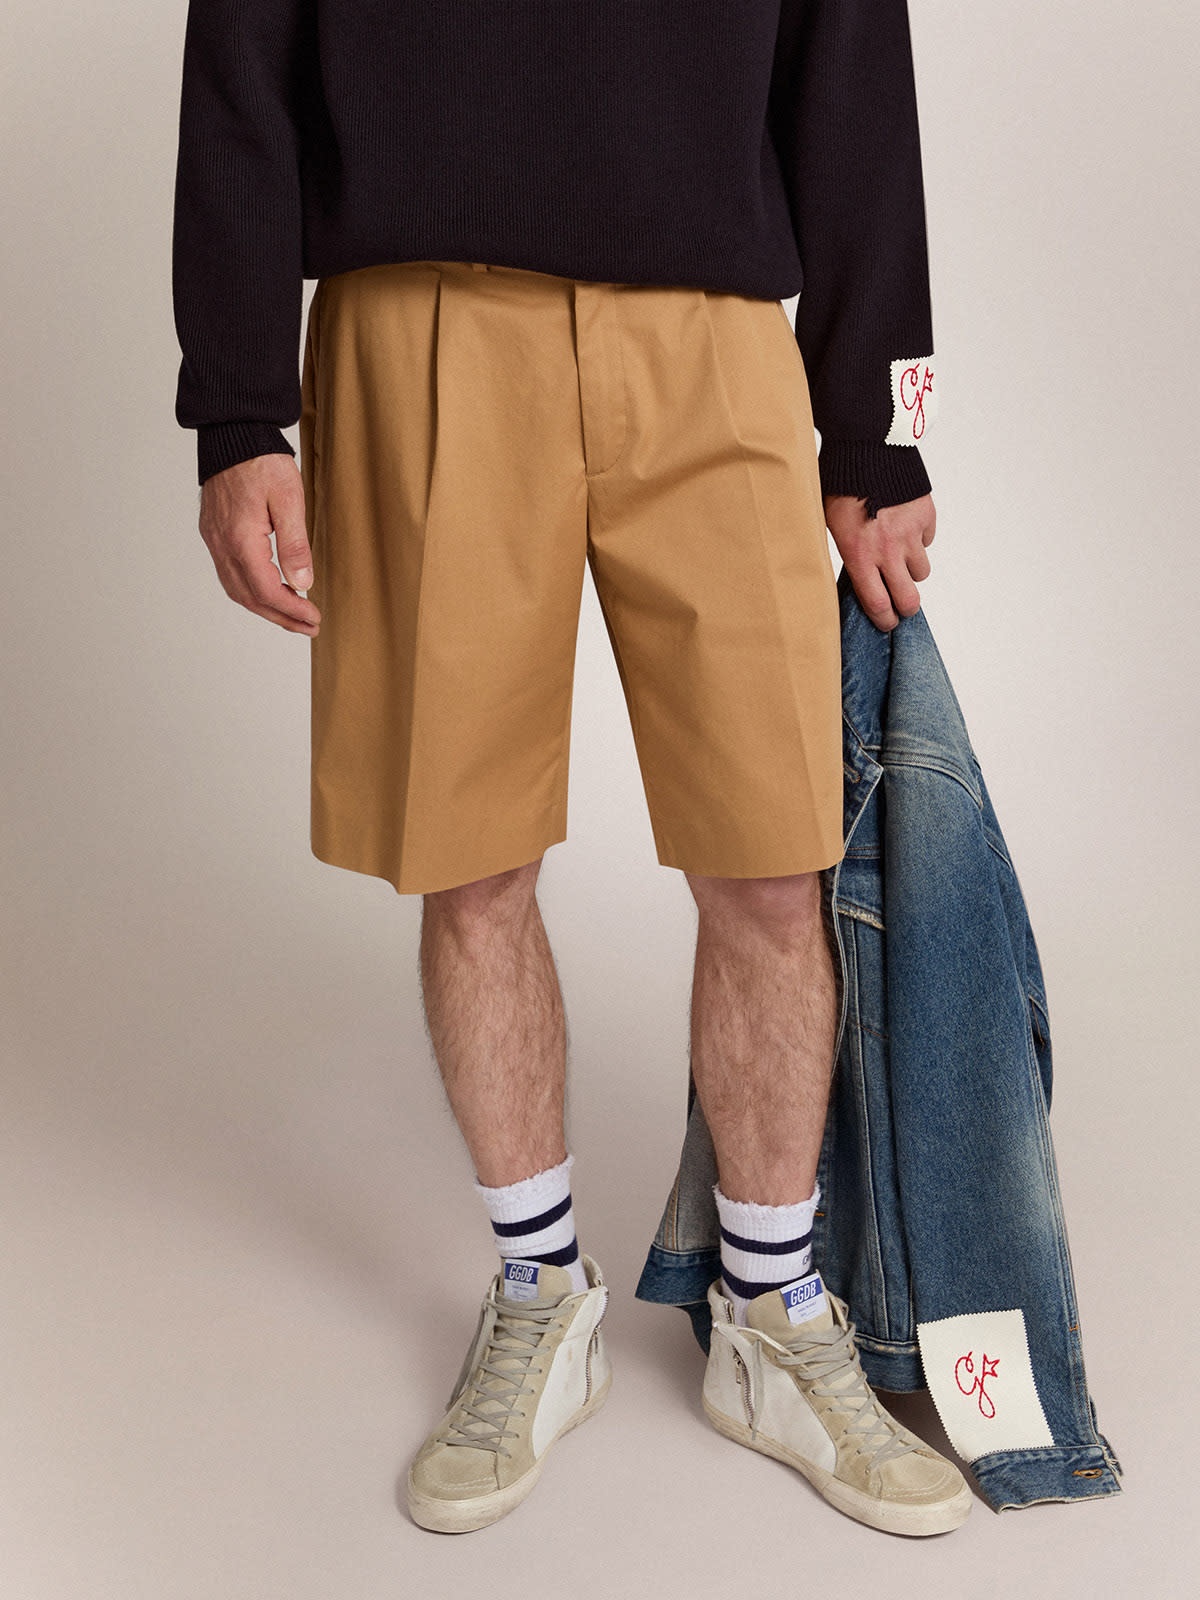 Men's bermuda shorts in beige cotton - 2